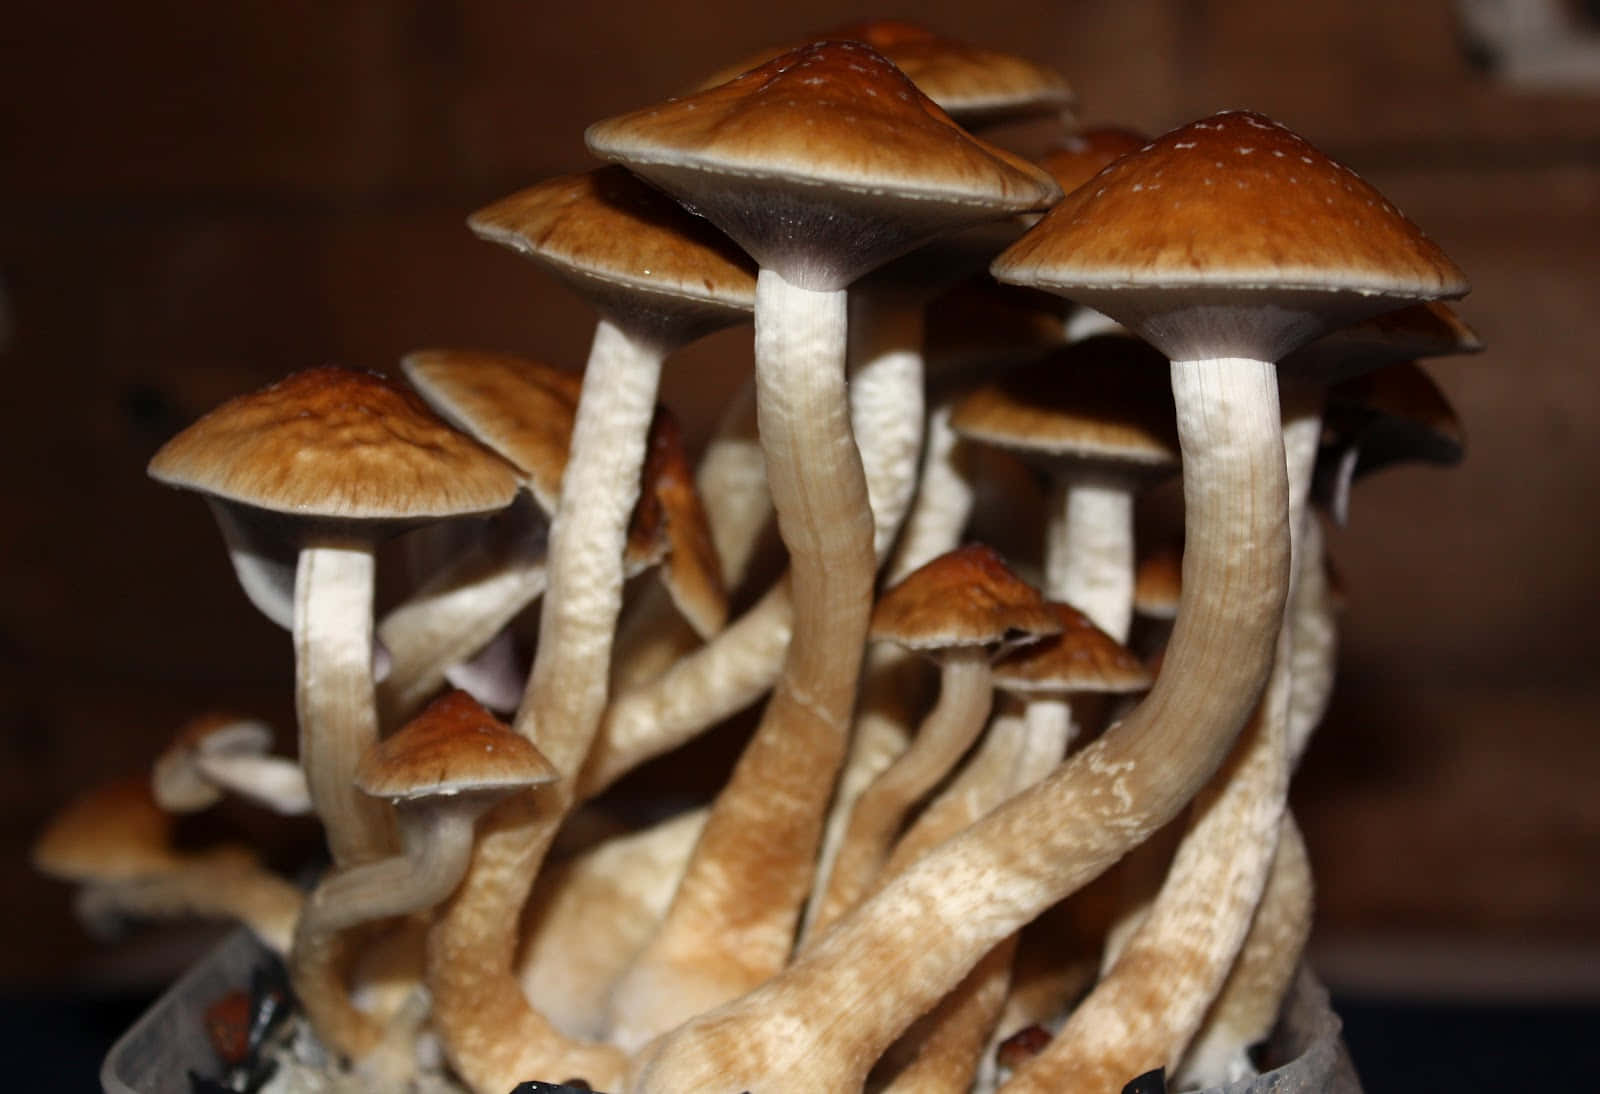 A colorful Magic Mushroom grows through a forest